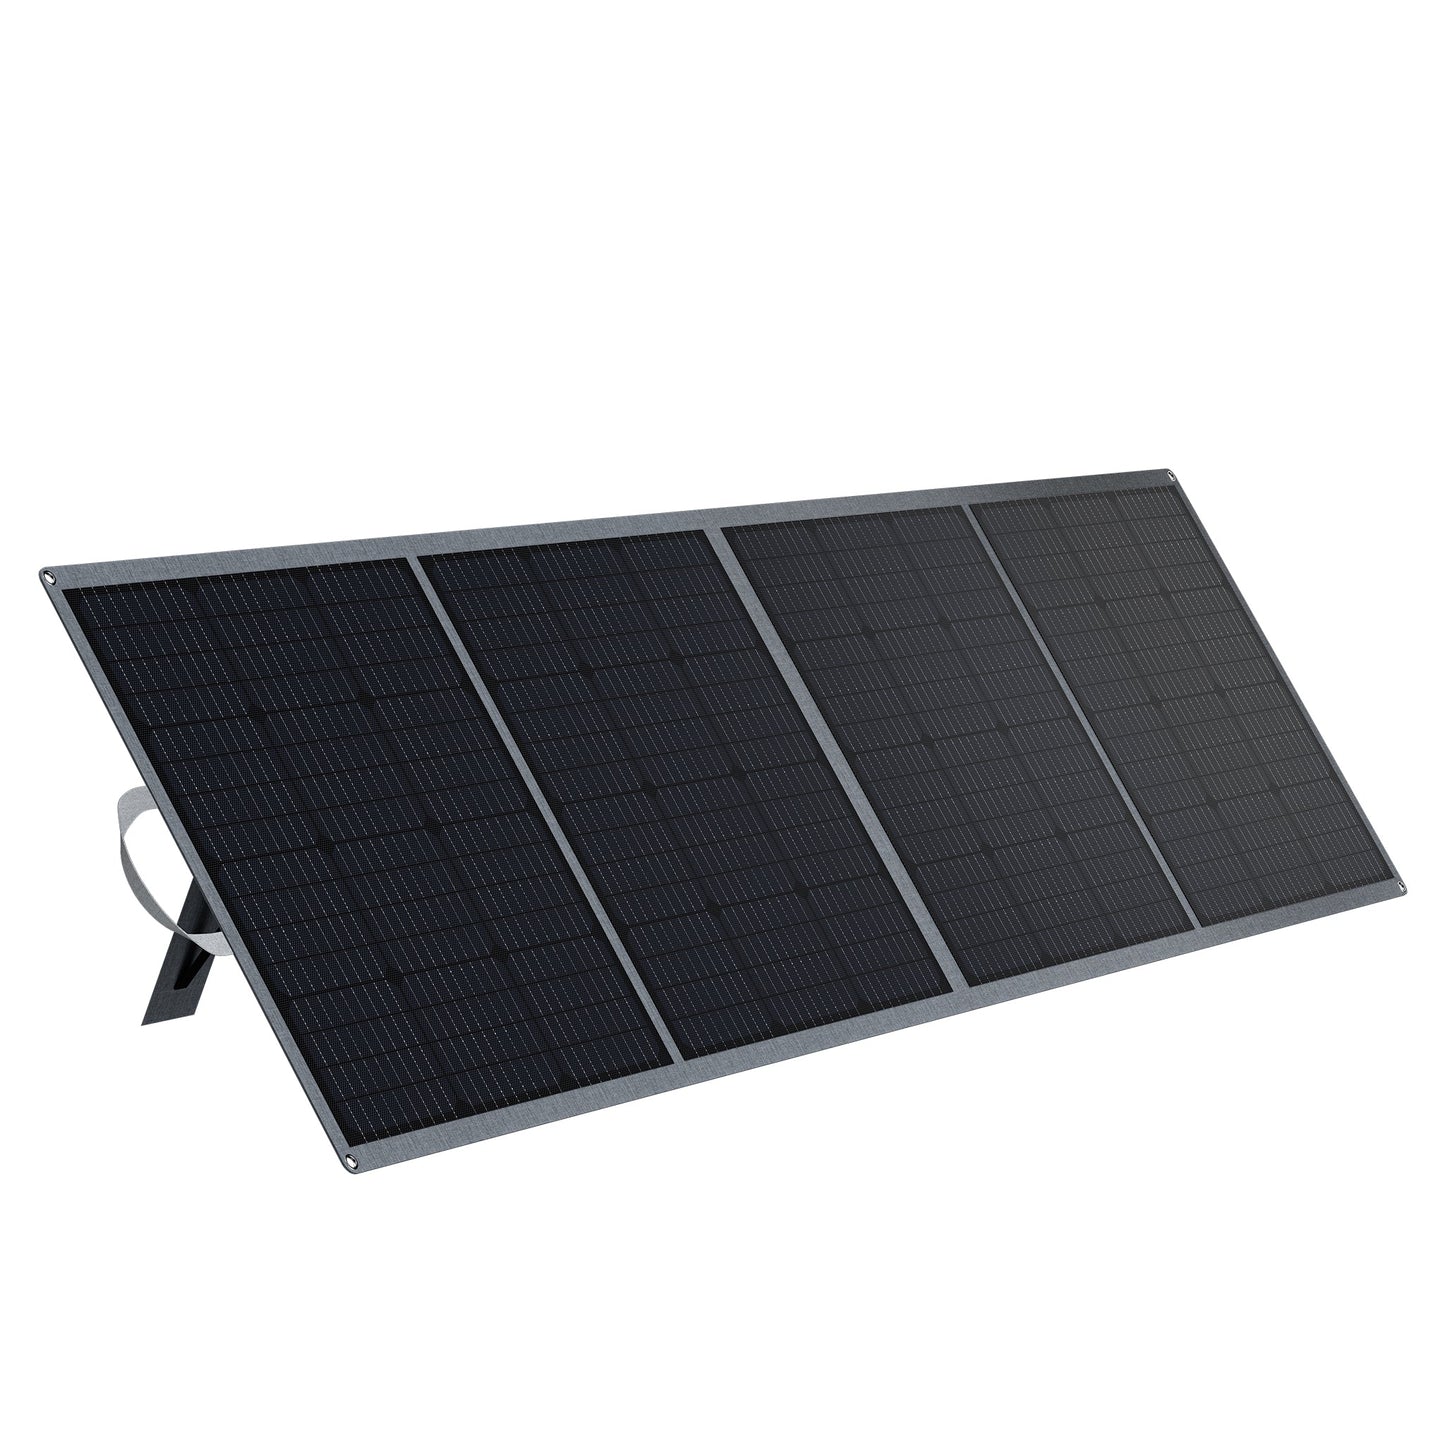 DaranEner SP200 Solar Panel | 200W - DaranEner Portable Power Station